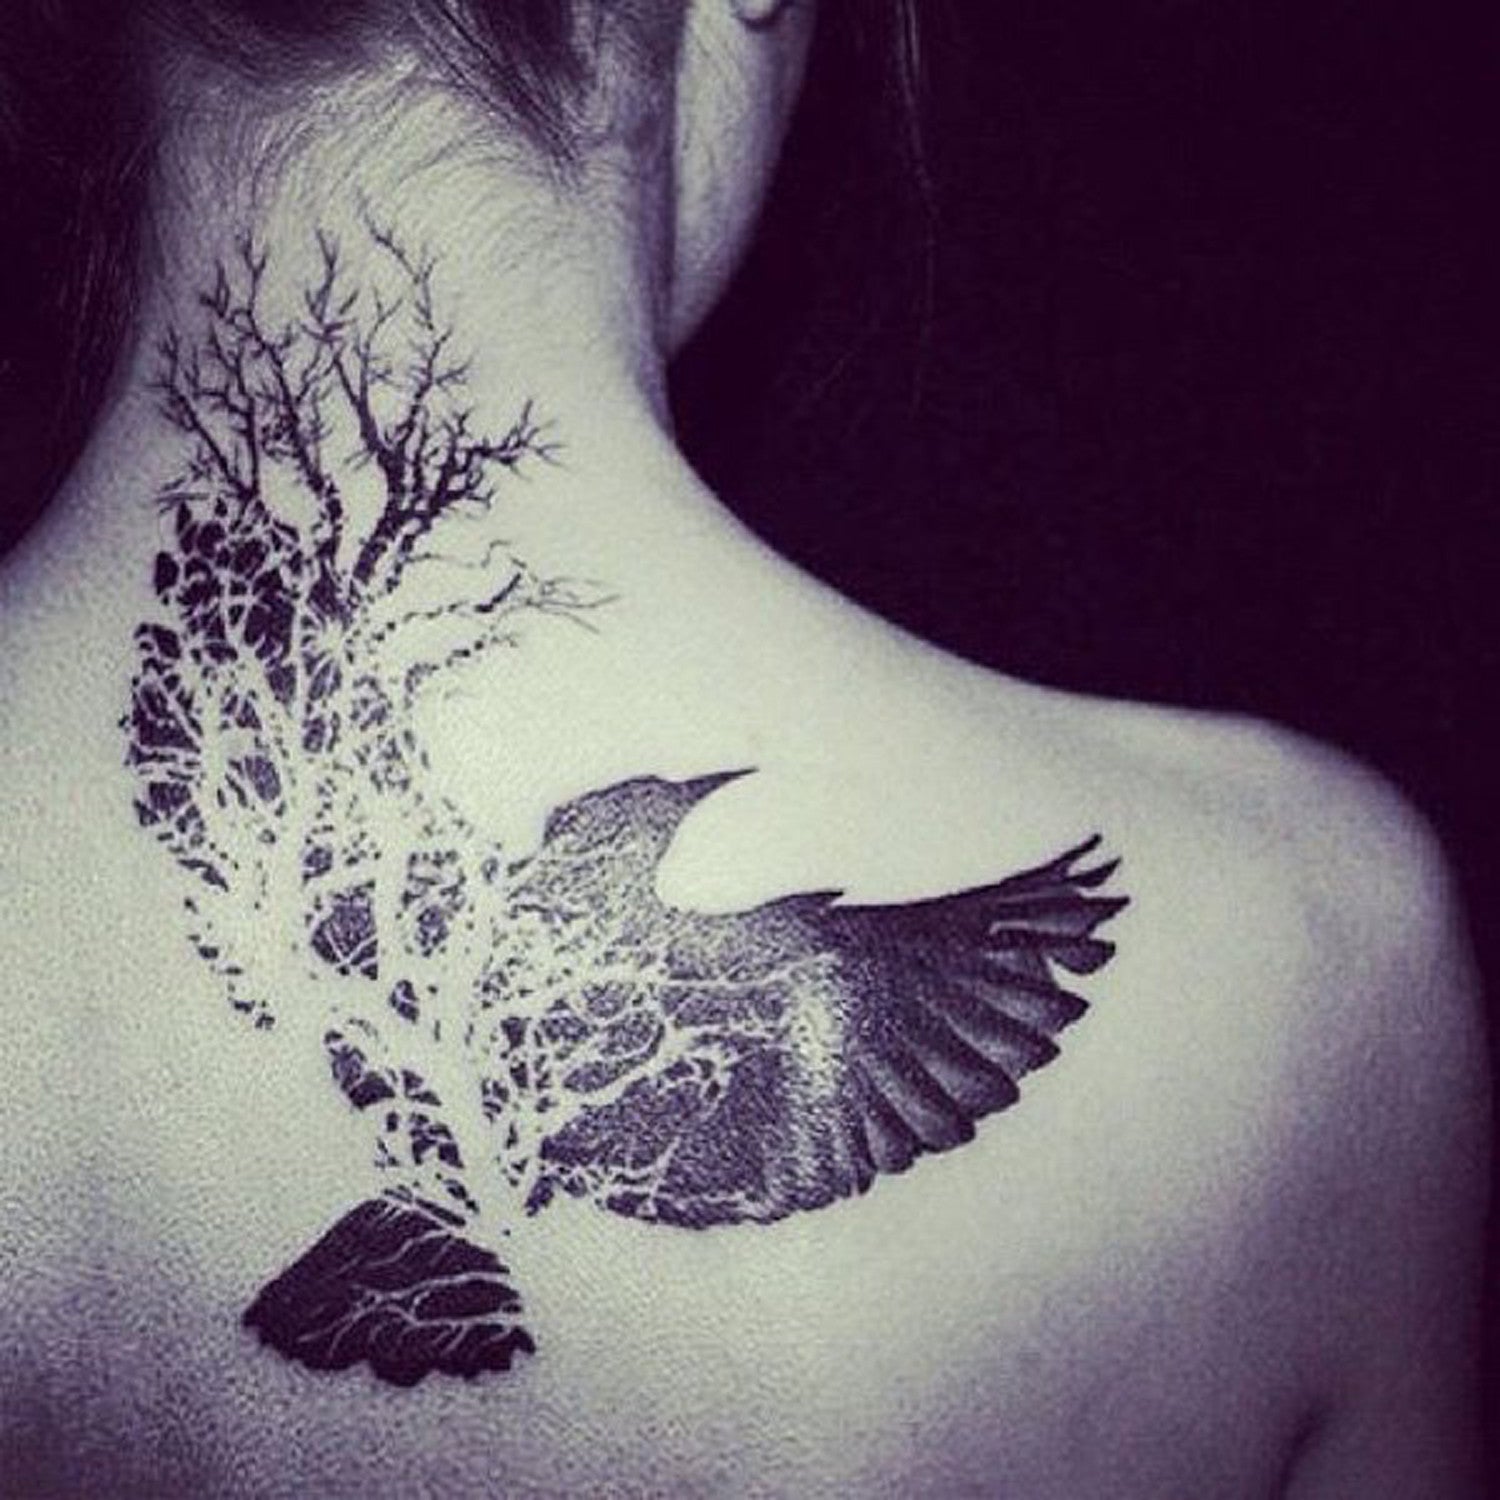 50+ Beautiful Tree Tattoo Ideas for Women – MyBodiArt